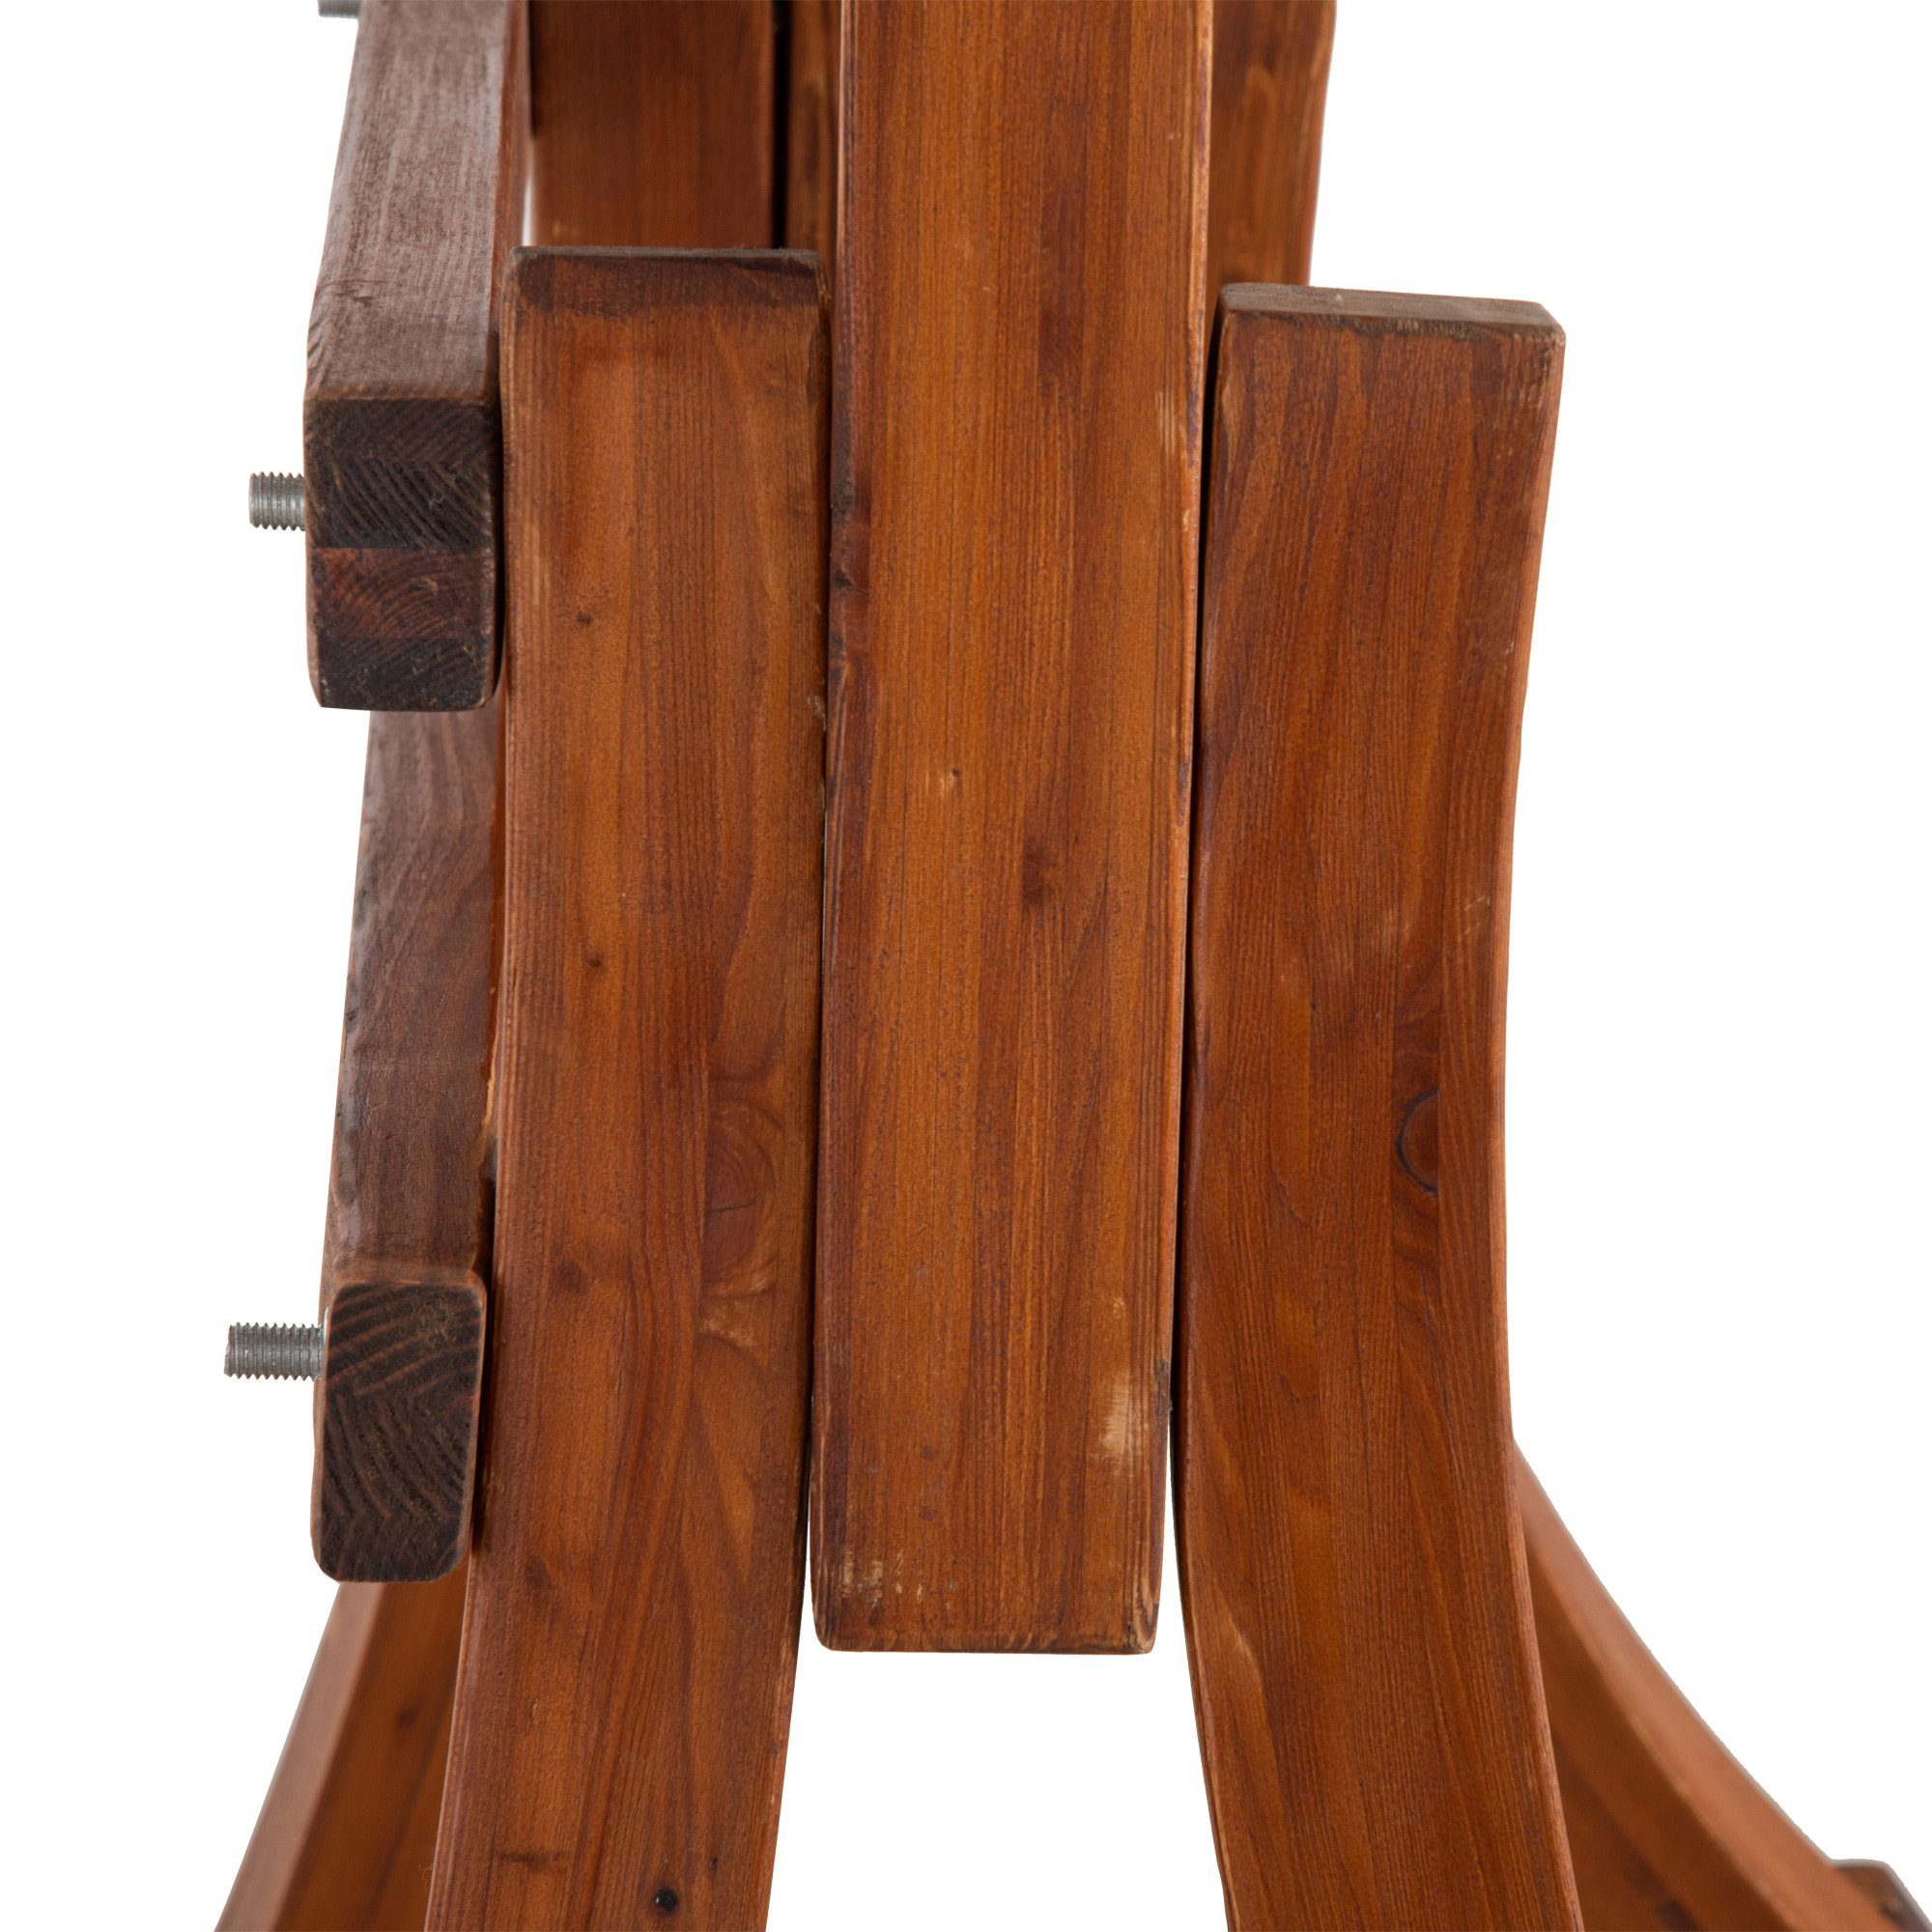 Natur Ständer max. Lärchenholz Hängemattenstuhl Hängematte kg Ständer, 120 Hängestuhl Outsunny Hängestuhlgestell aus